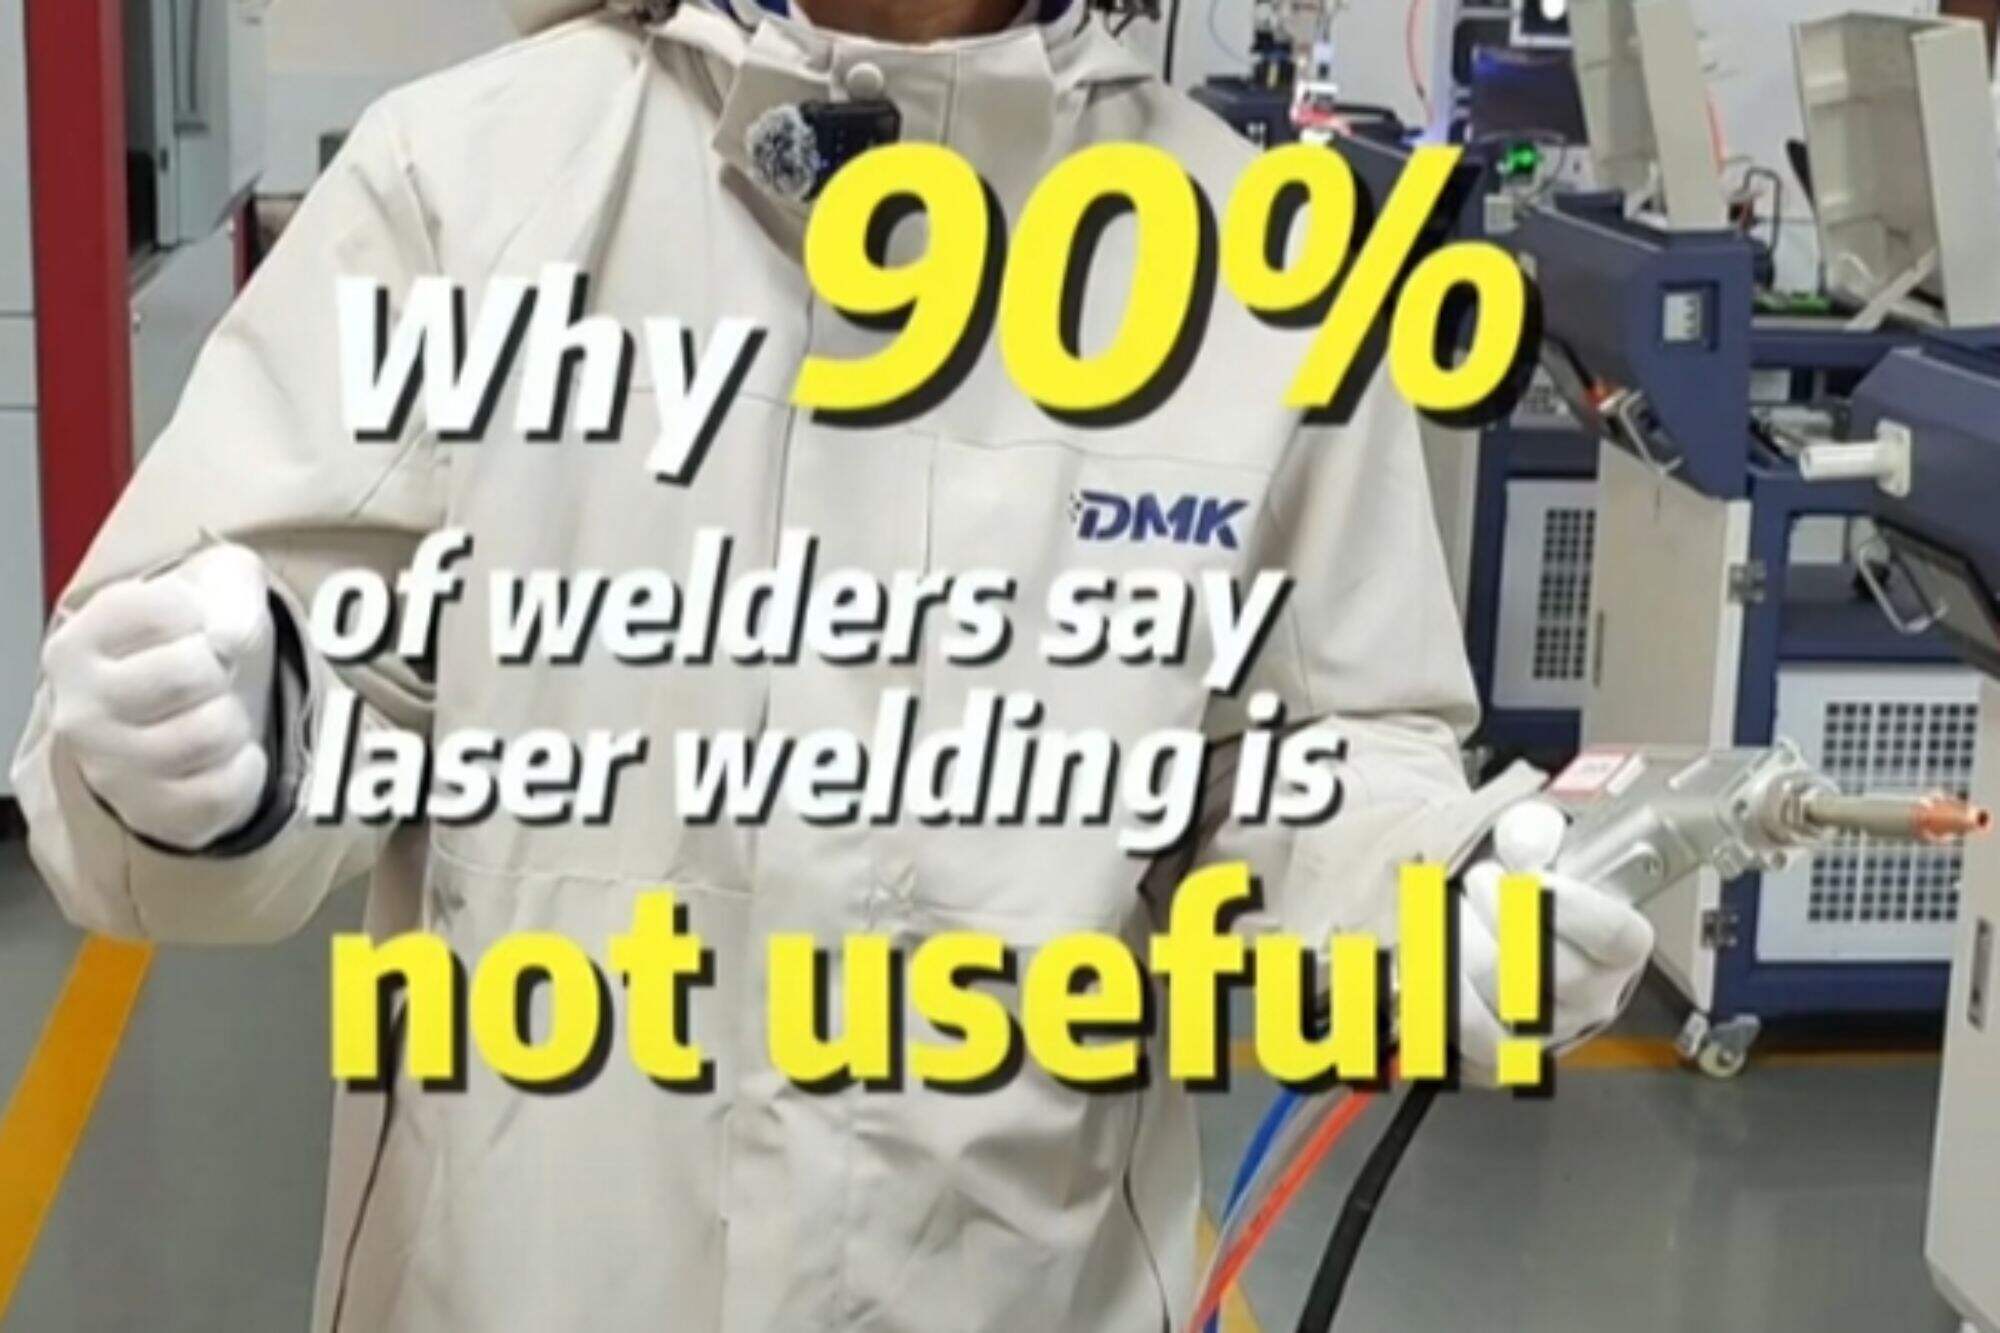 why 90% of welders say laser welding is not useful!